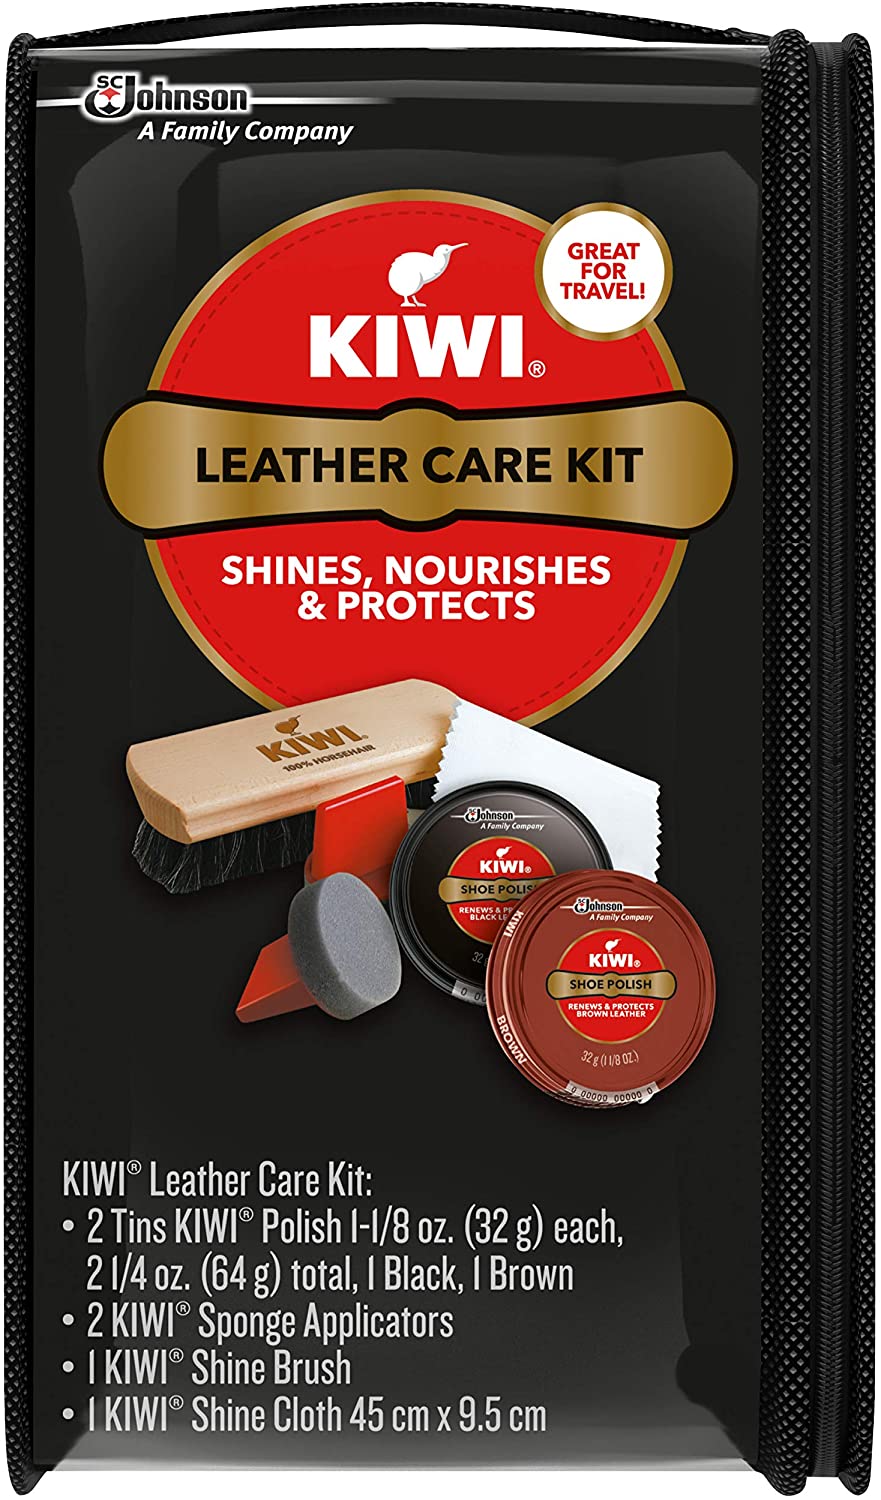 KIWI Travel Shoe Shine & Polish Care Kit, 6-Piece